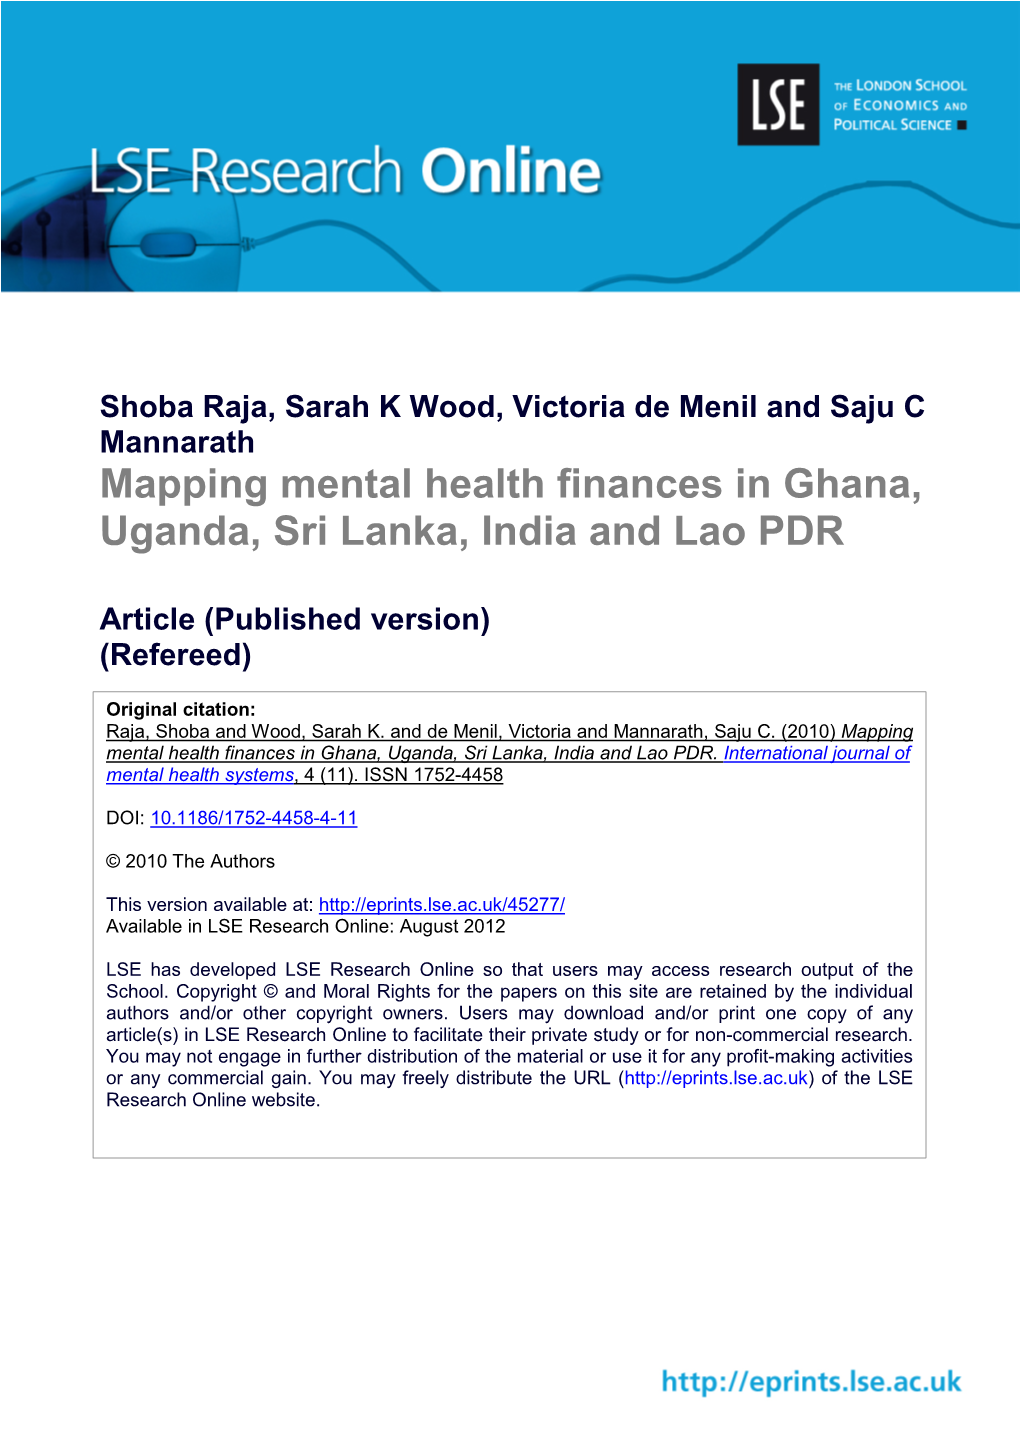 Mapping Mental Health Finances in Ghana, Uganda, Sri Lanka, India and Lao PDR